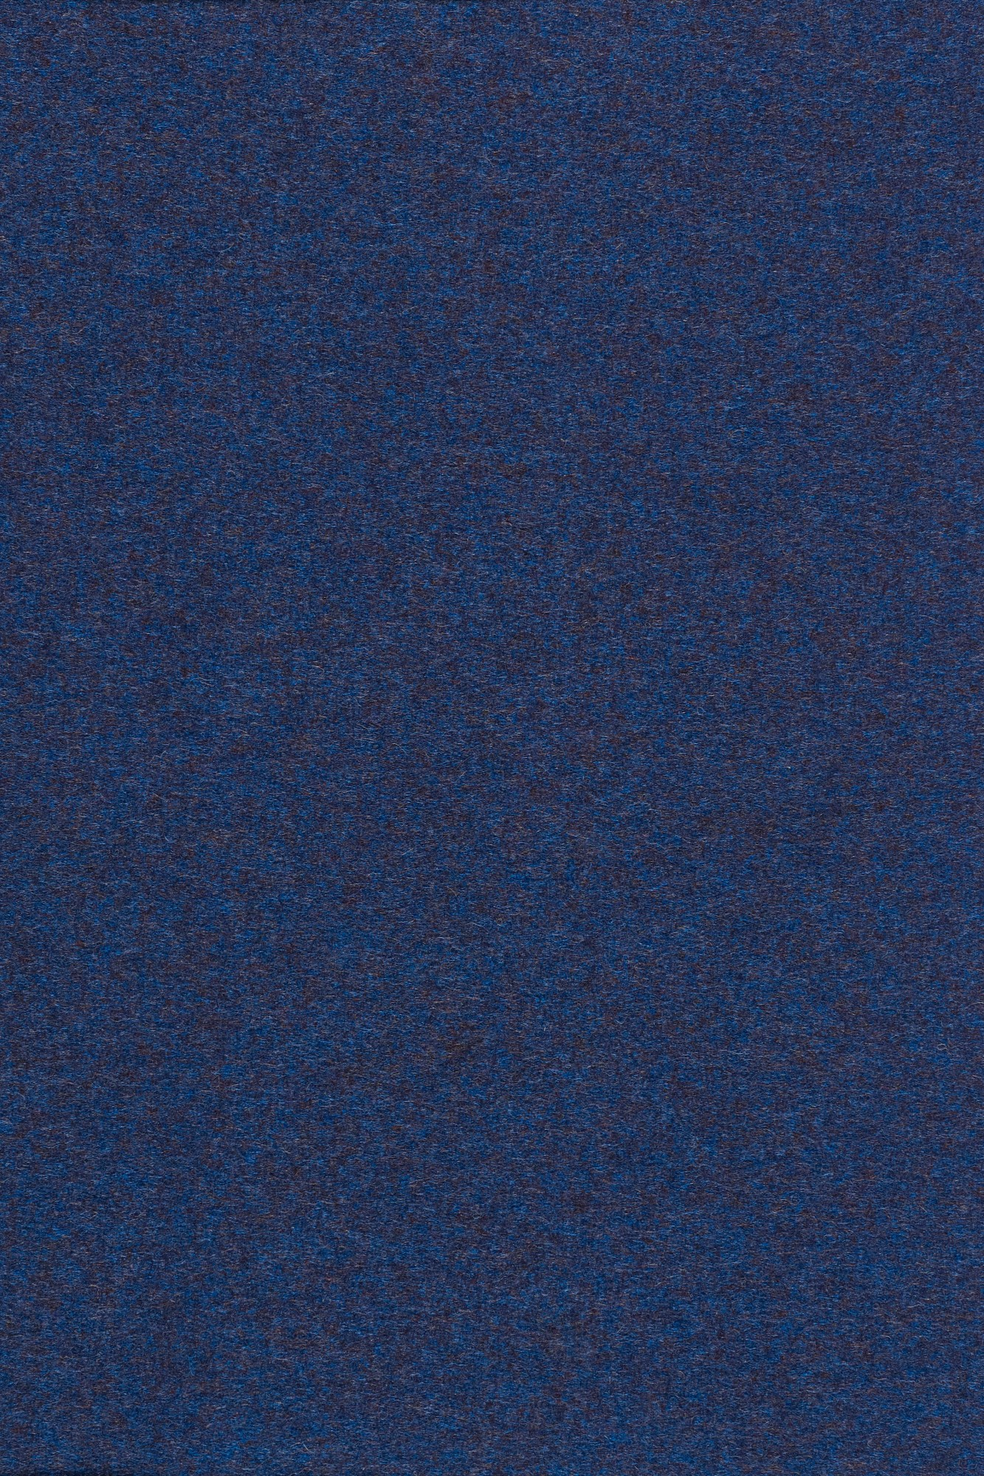 Fabric sample Divina MD 773 blue